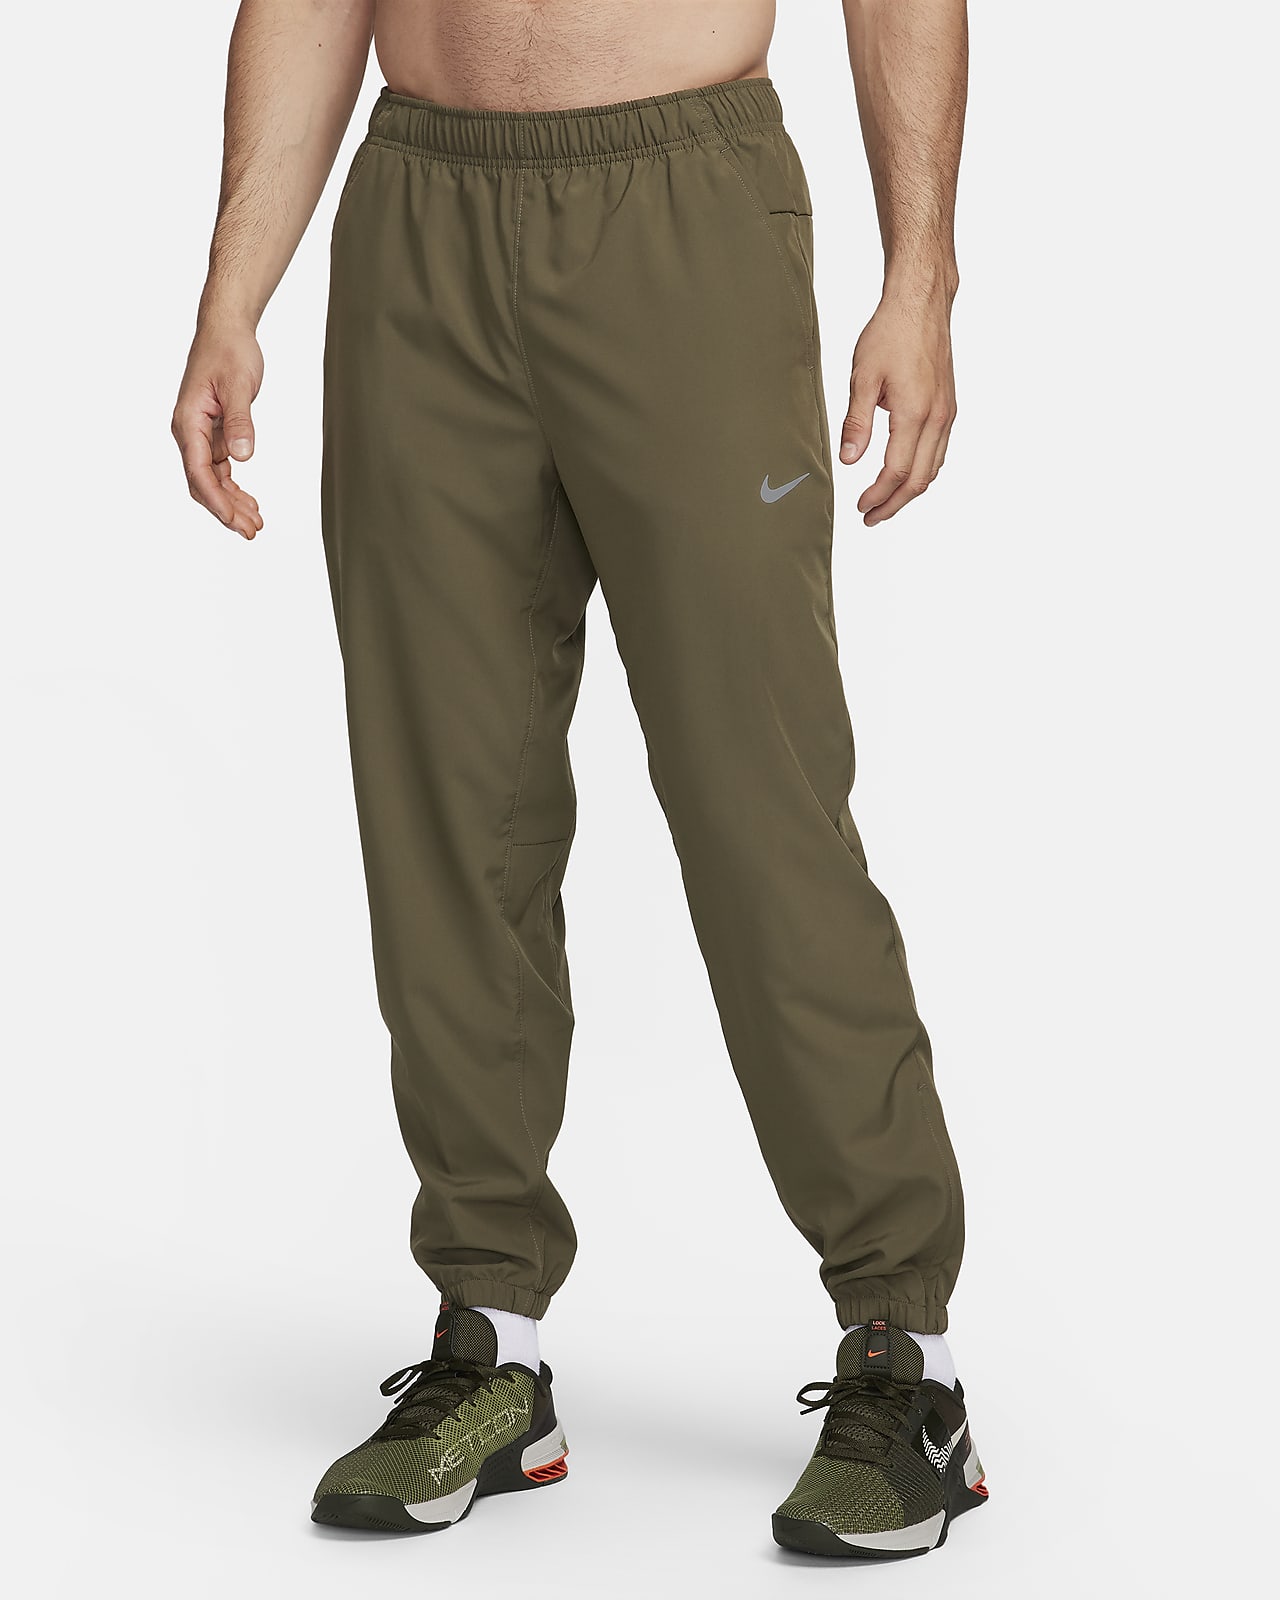 Nike Men's Sweat Pants Casual Regular Fit Trouser Sports Joggers Gym Wear  Track | eBay